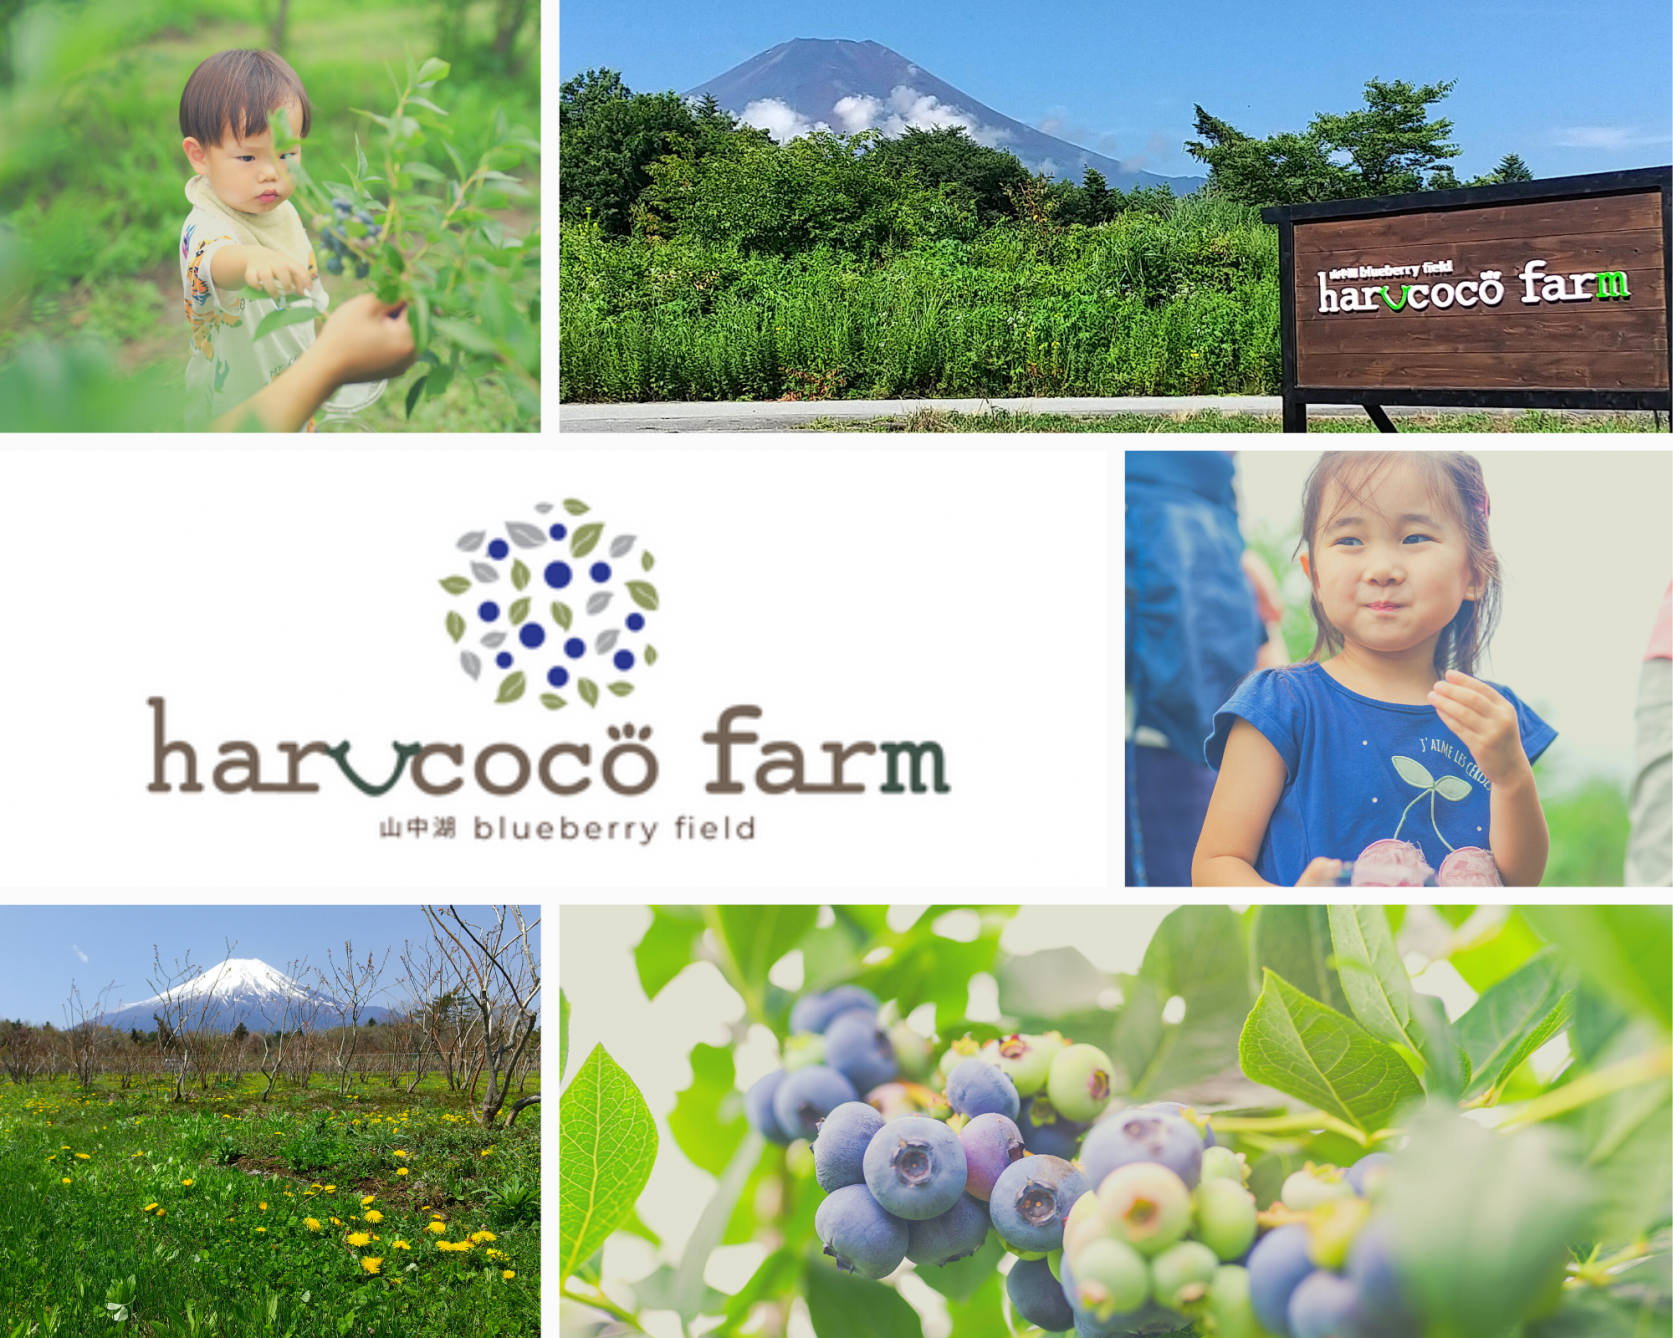 山中湖blueberry field harucoco farm-1